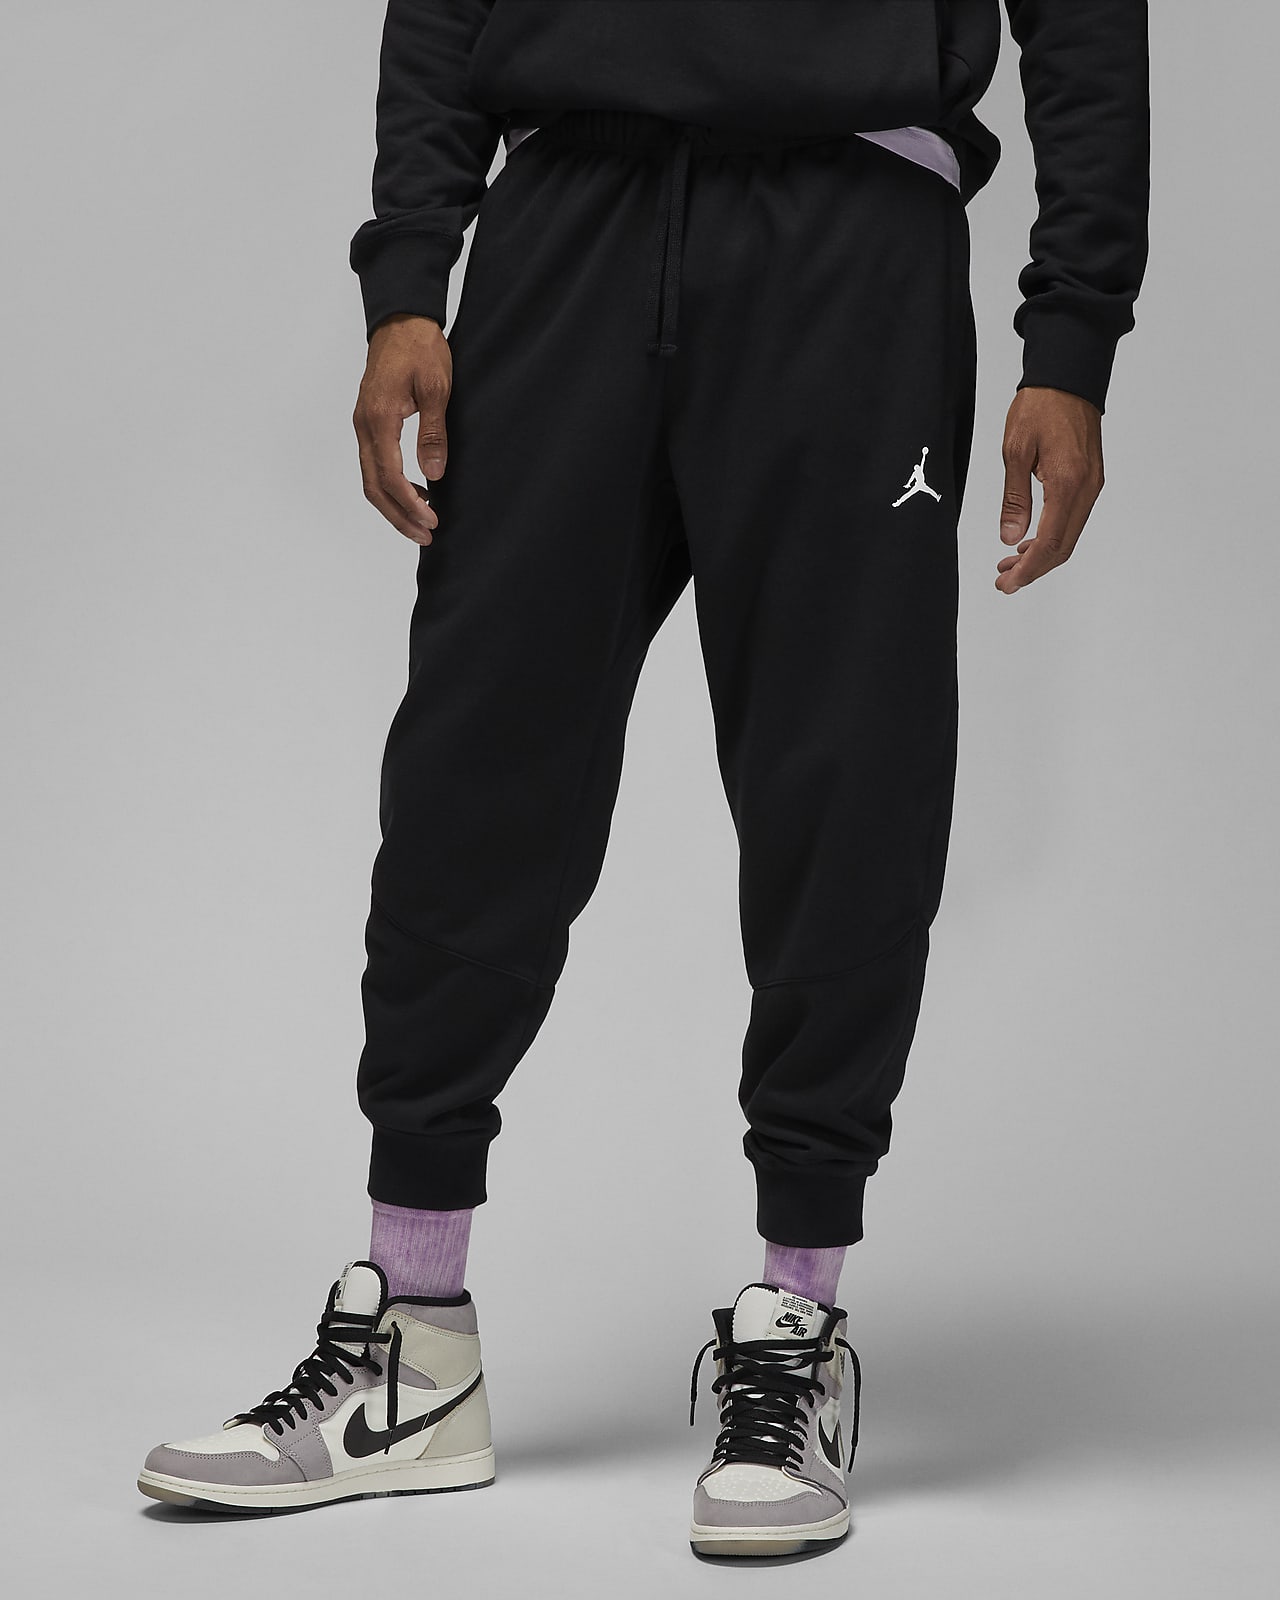 Jordan Dri-FIT Sport Men's Fleece Pants.